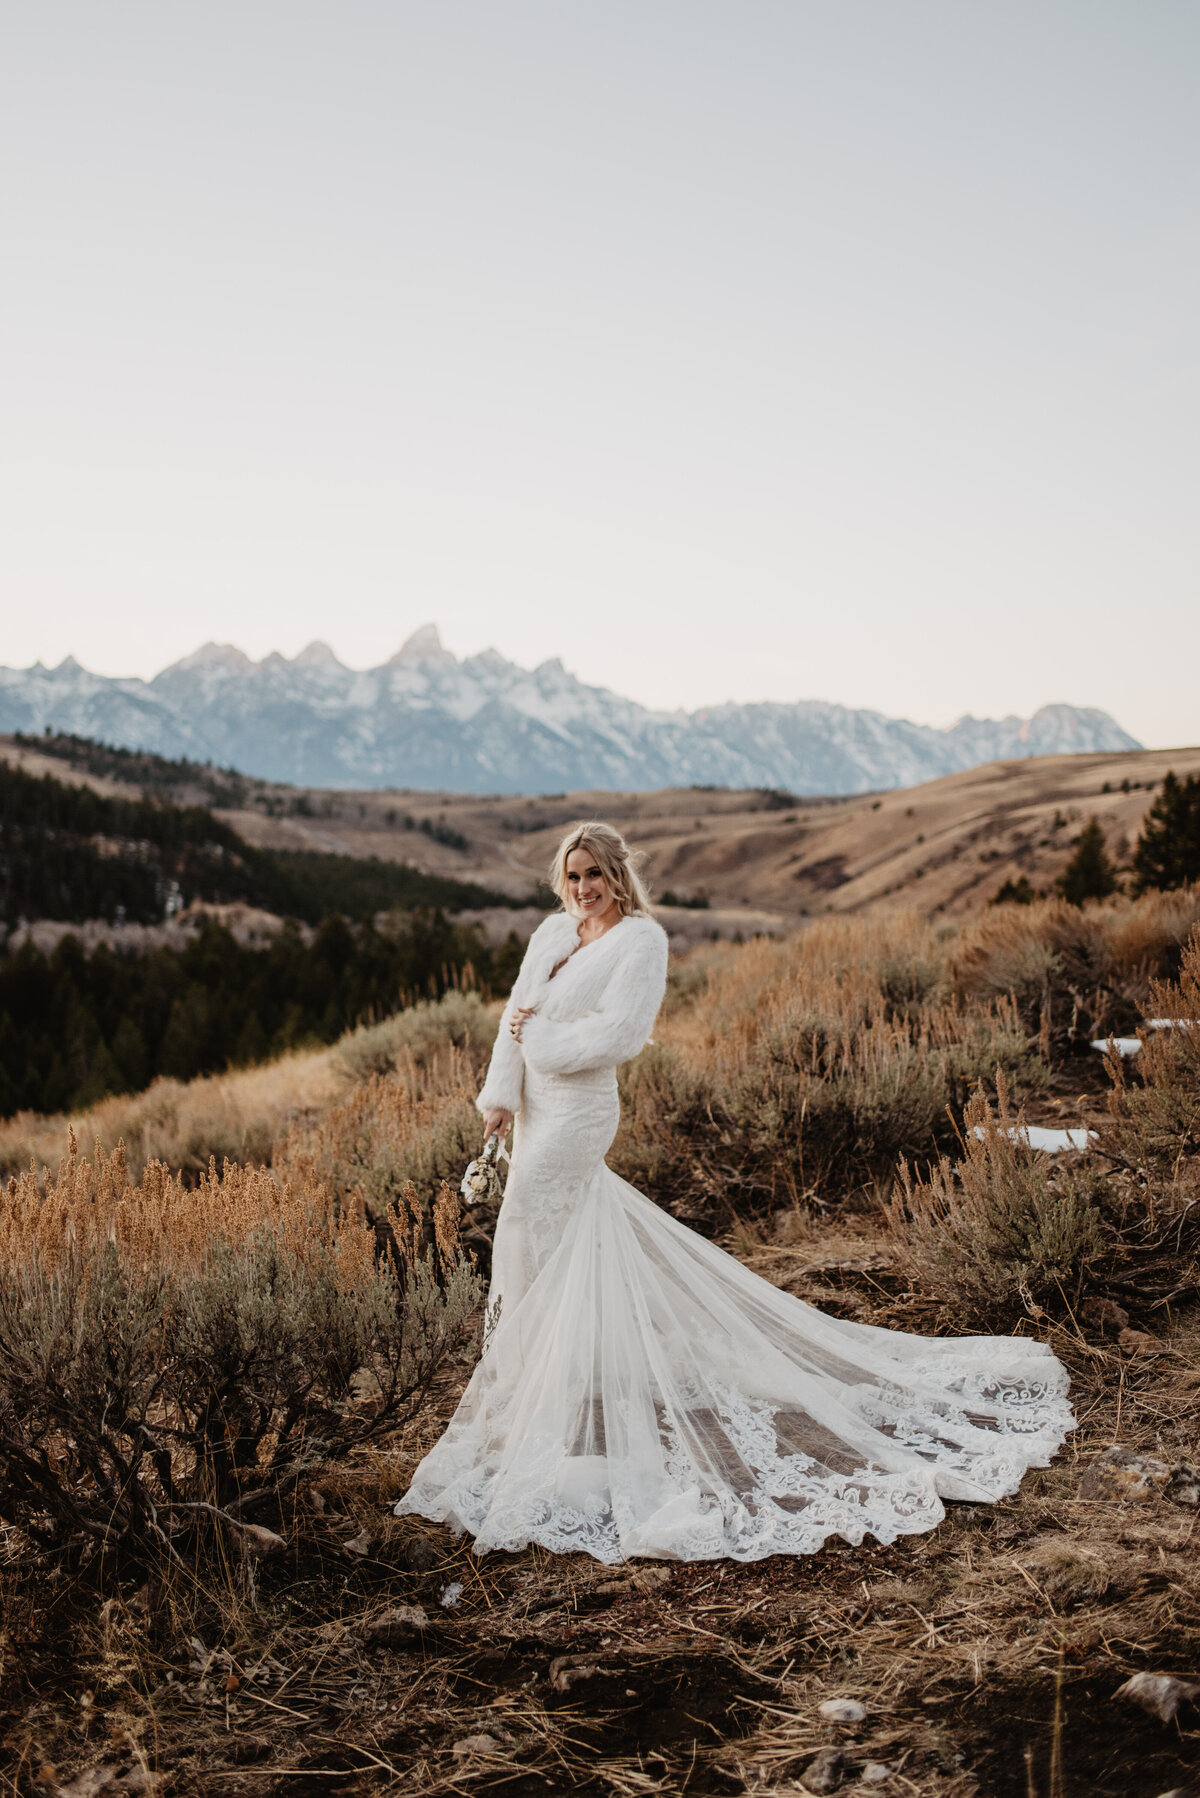 Jackson Hole Photographers capture woman wearing wedding dress in Grand Teton National Park